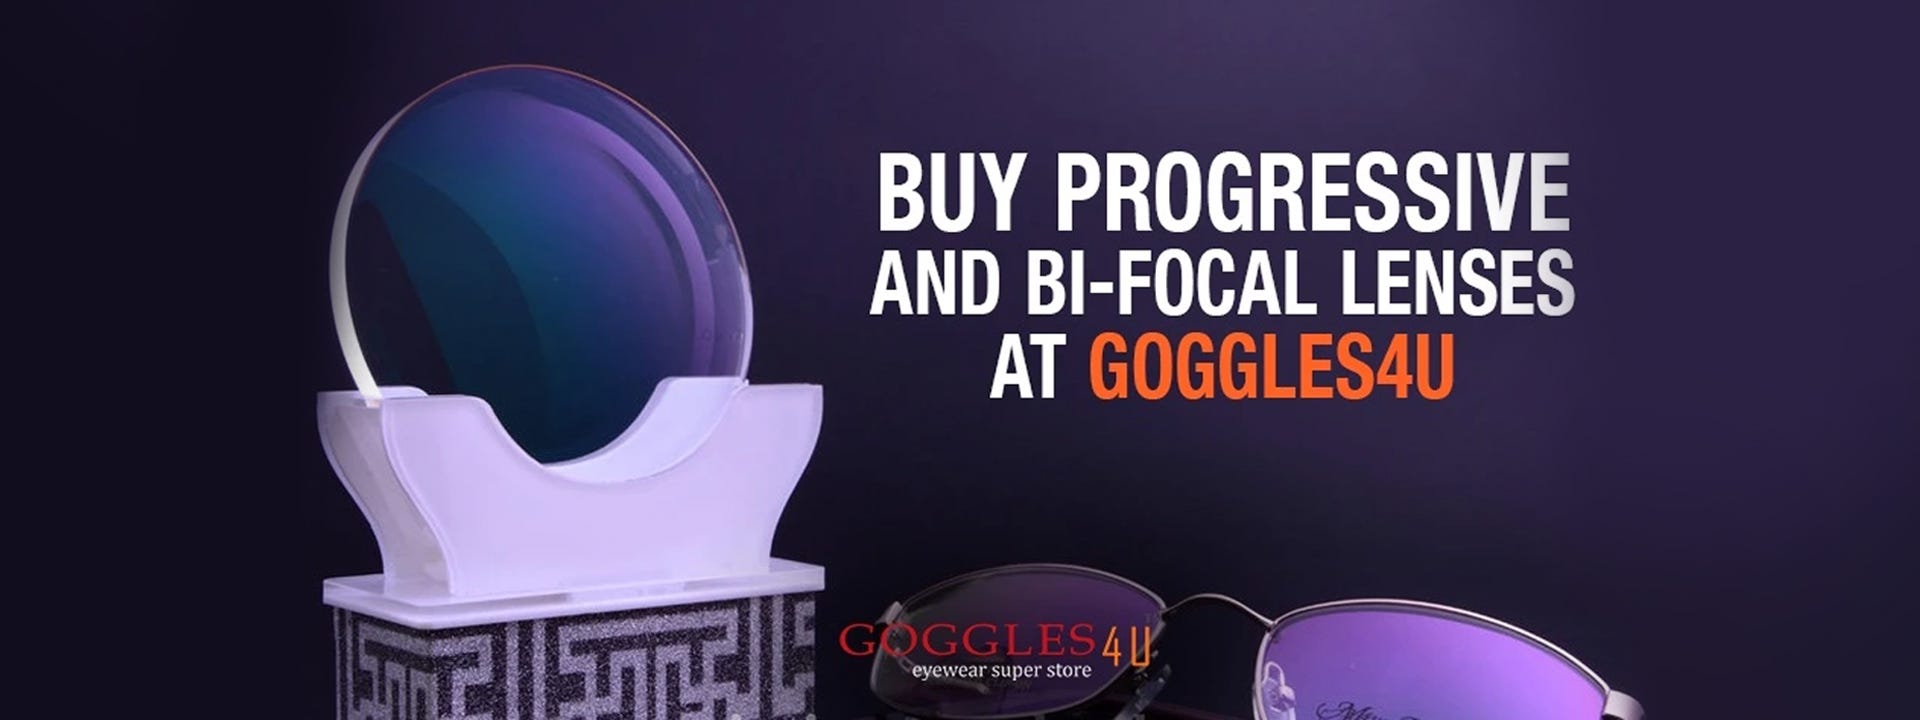 Buy Distance, Reading, Progressive and Bi-Focal Lenses at Goggles4U